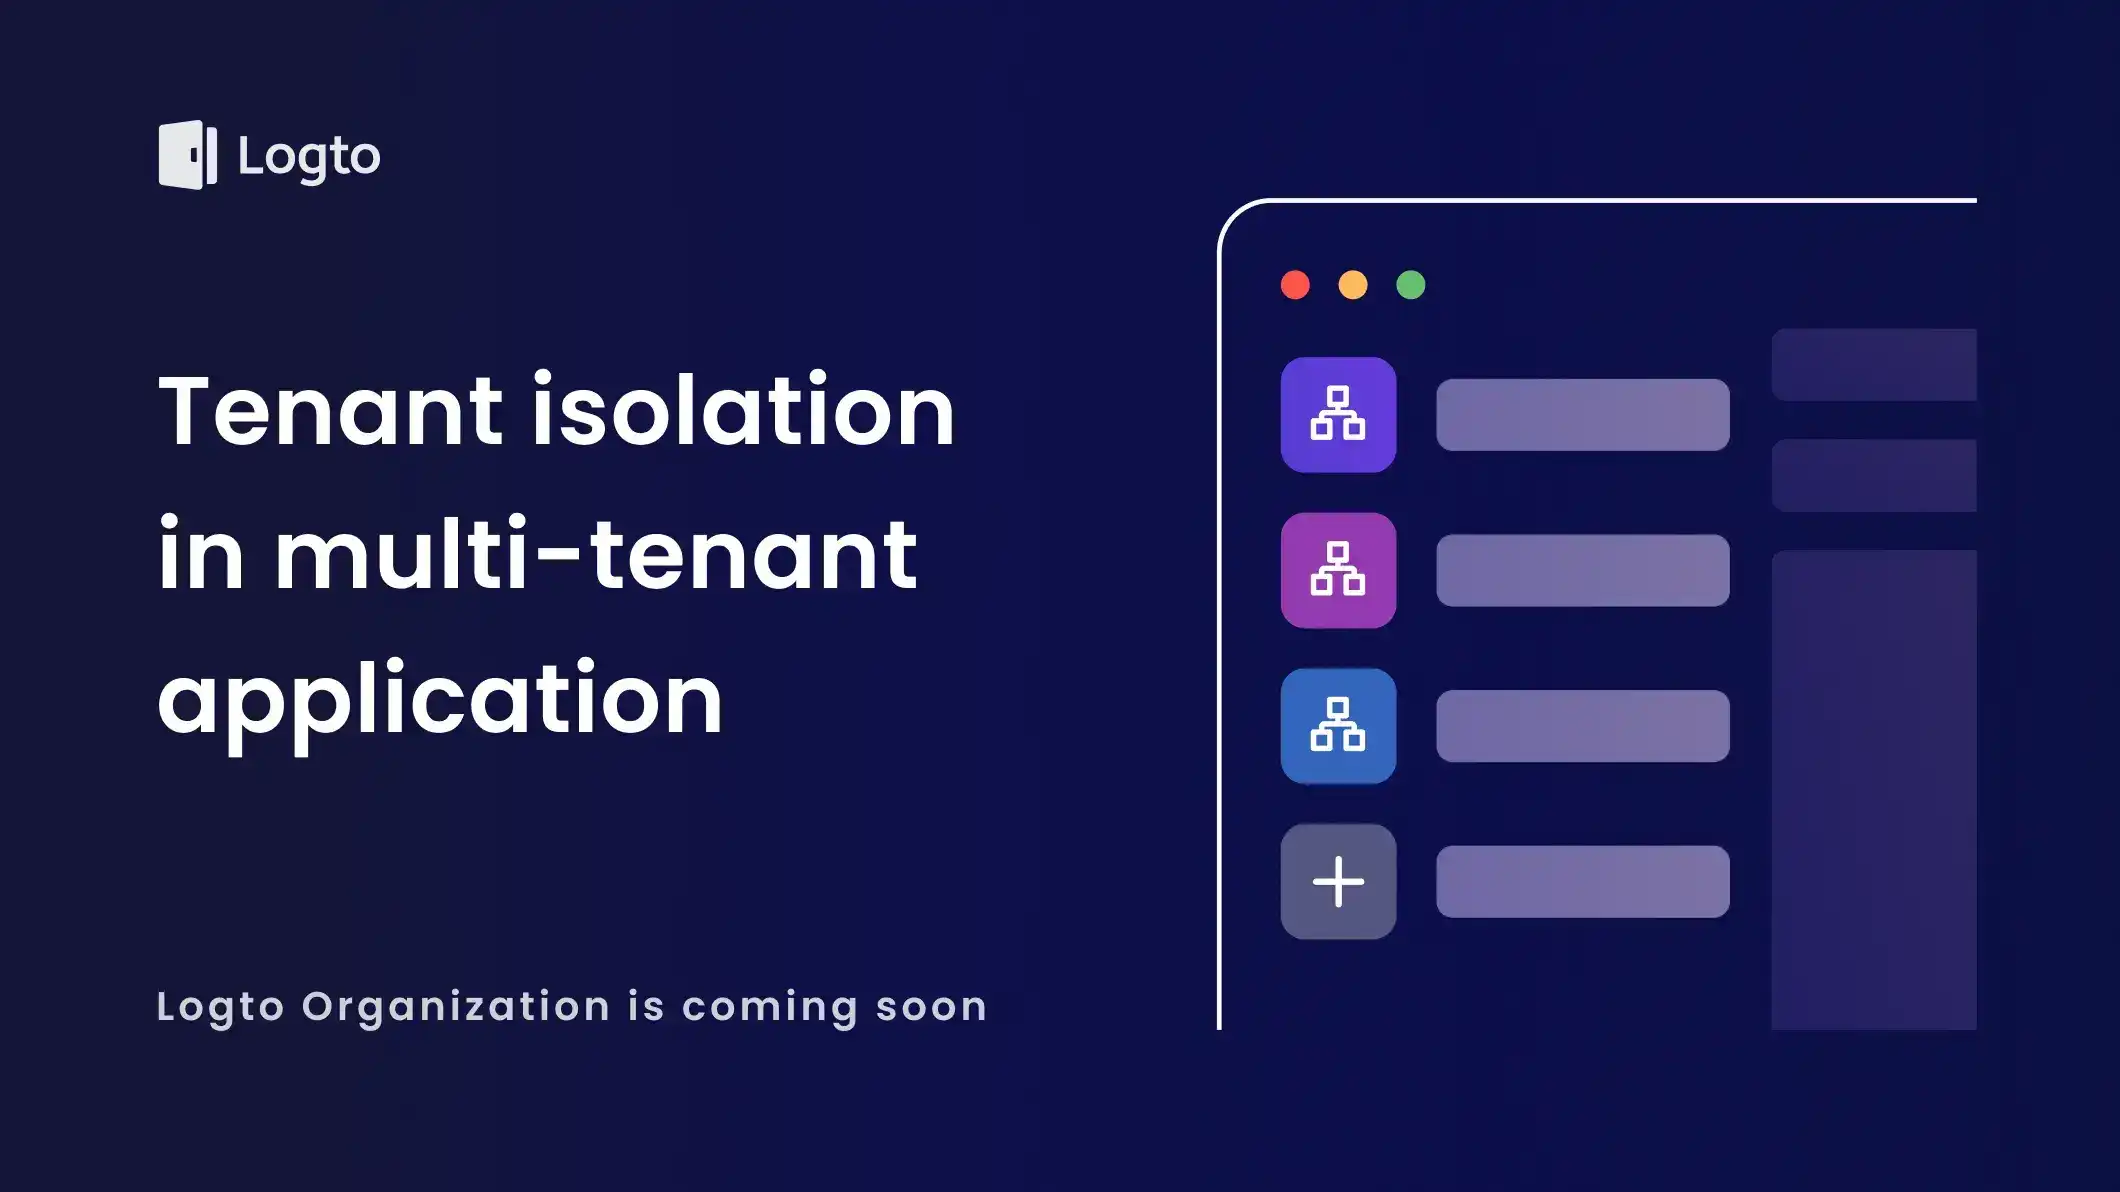 Tenant isolation in multi-tenant application